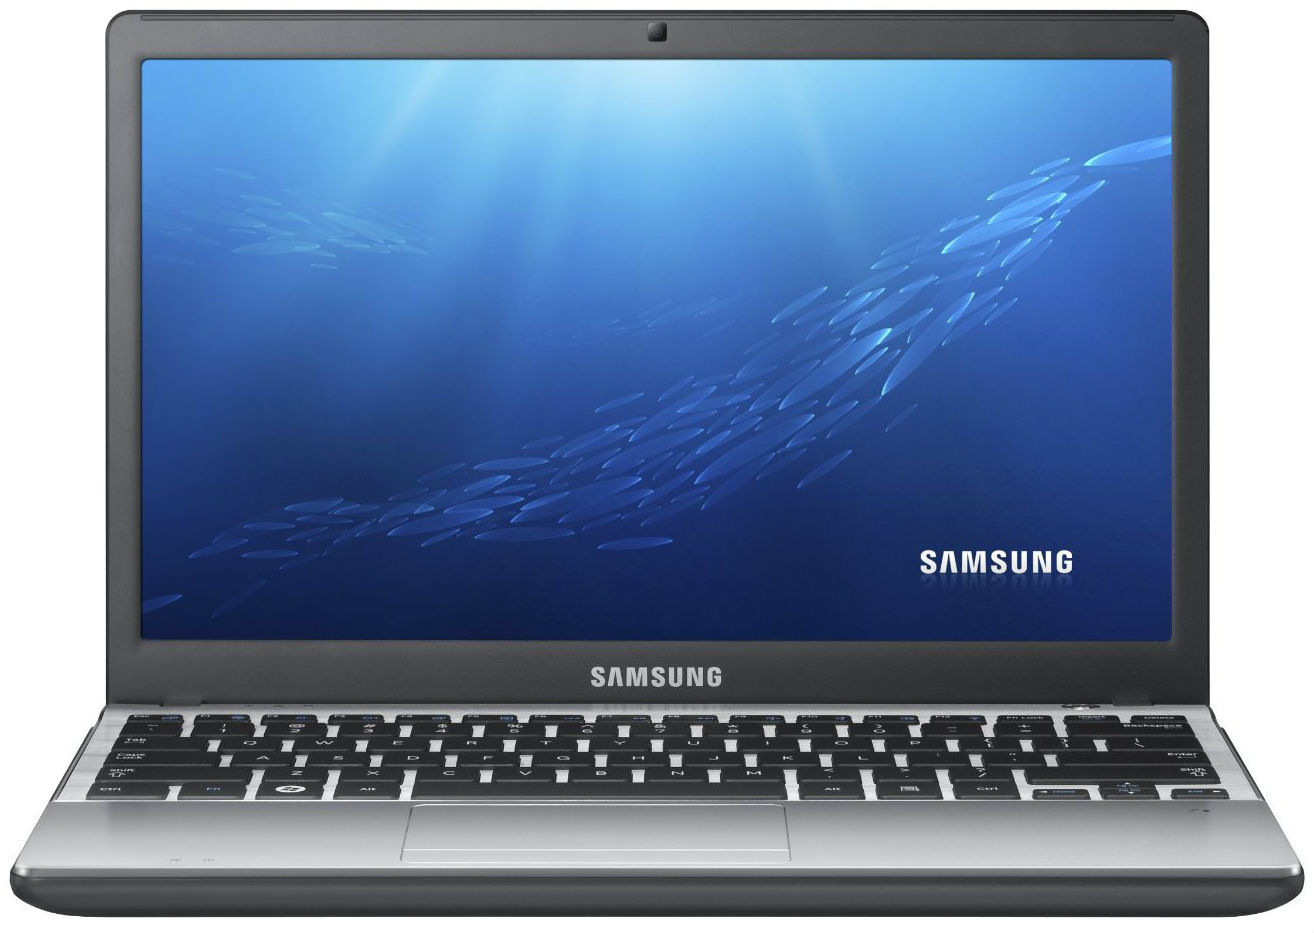 Samsung Series 3 NP350U2B-A03 Laptop (Core i3 2nd Gen/4 GB/500 GB/Windows 7) Price